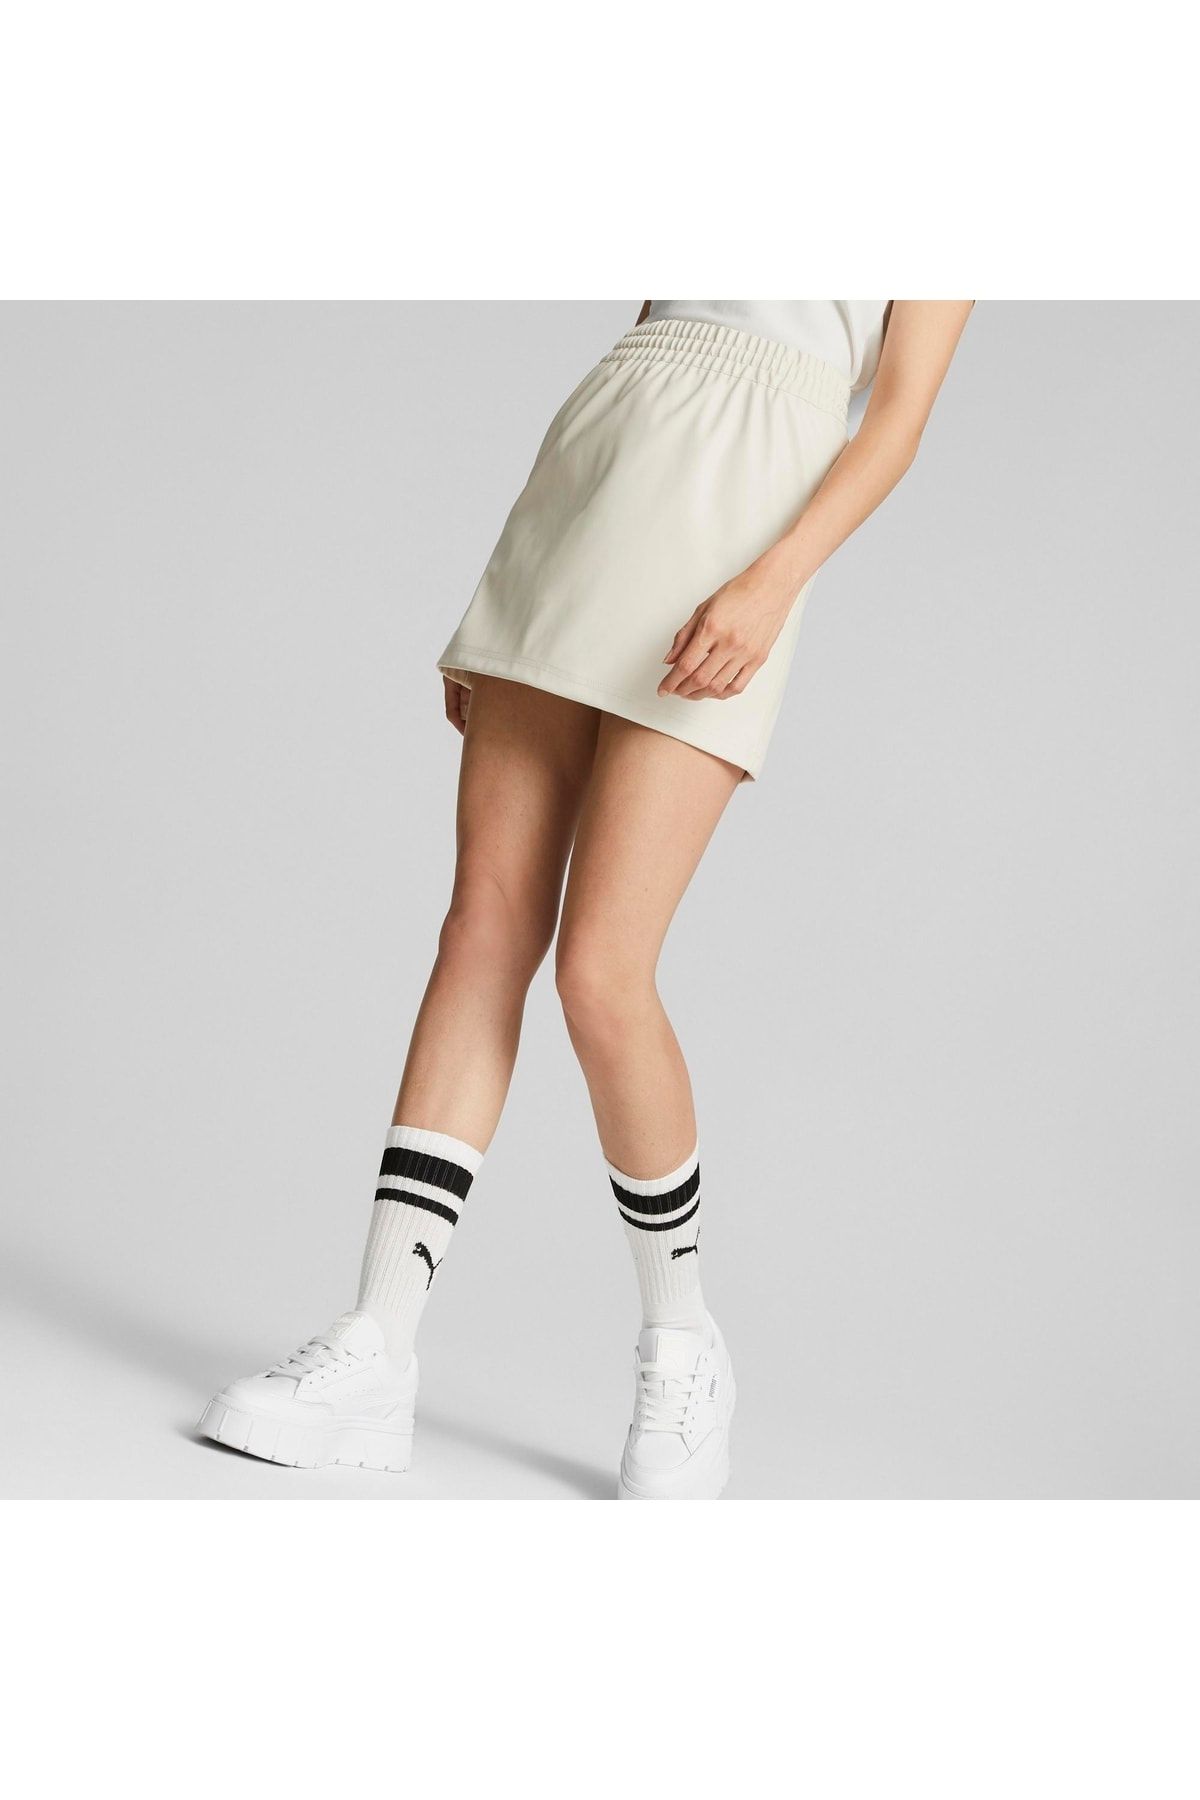 Puma T7 Faux Leather Mini Skirt Pristine Beyaz Kadın Etek